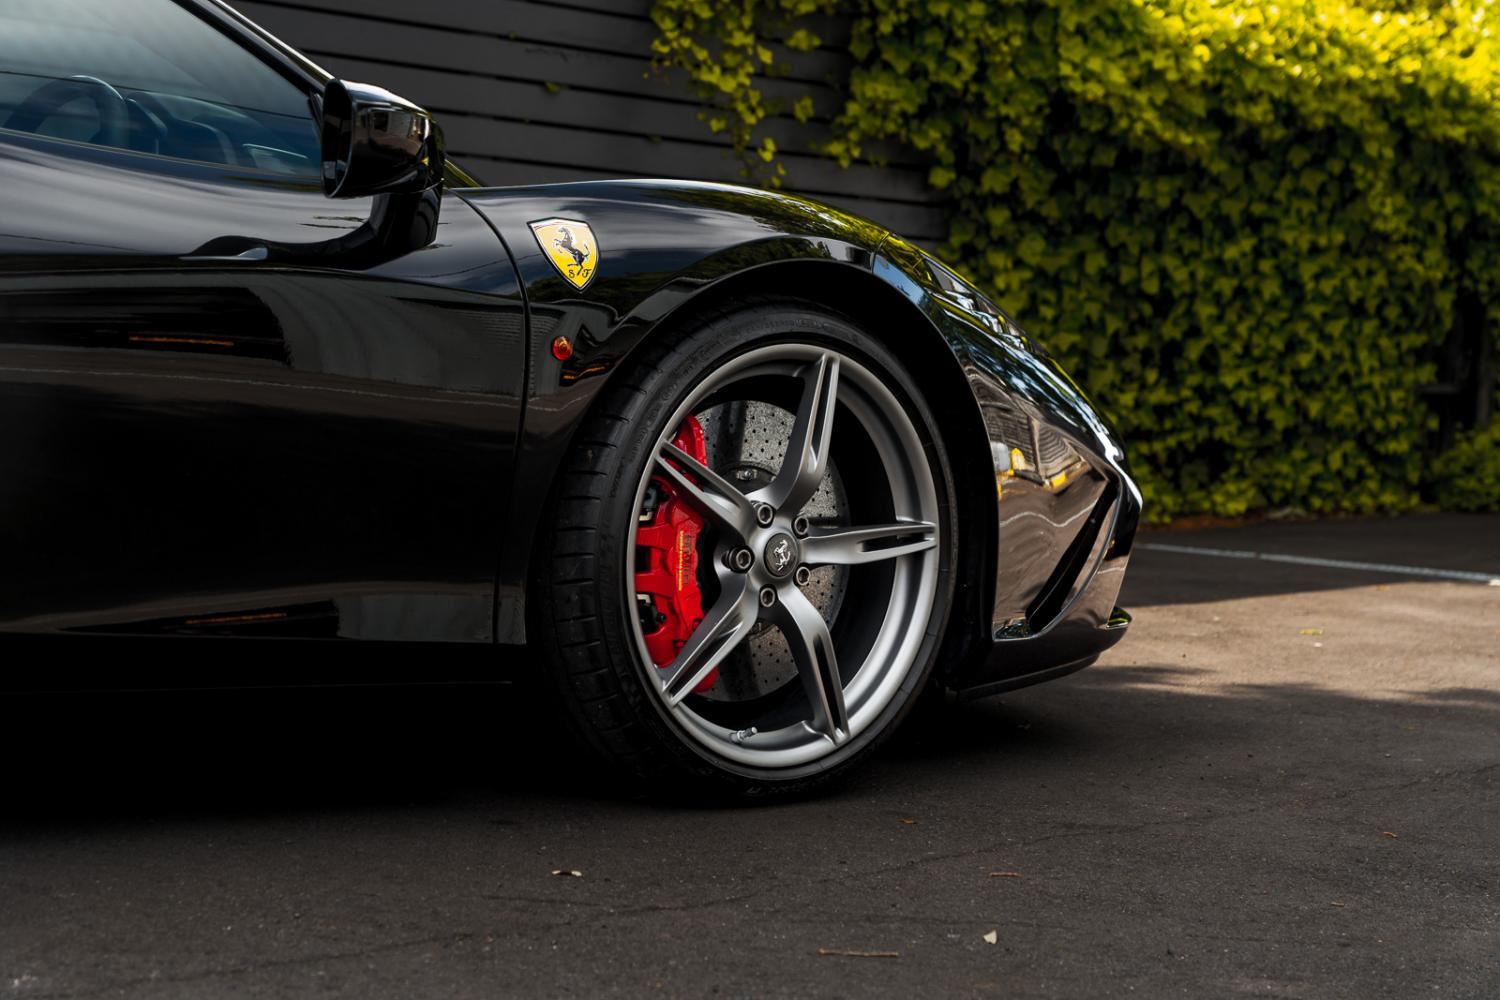 Ferrari 458 speciale rohzergosrjforqsxdurp